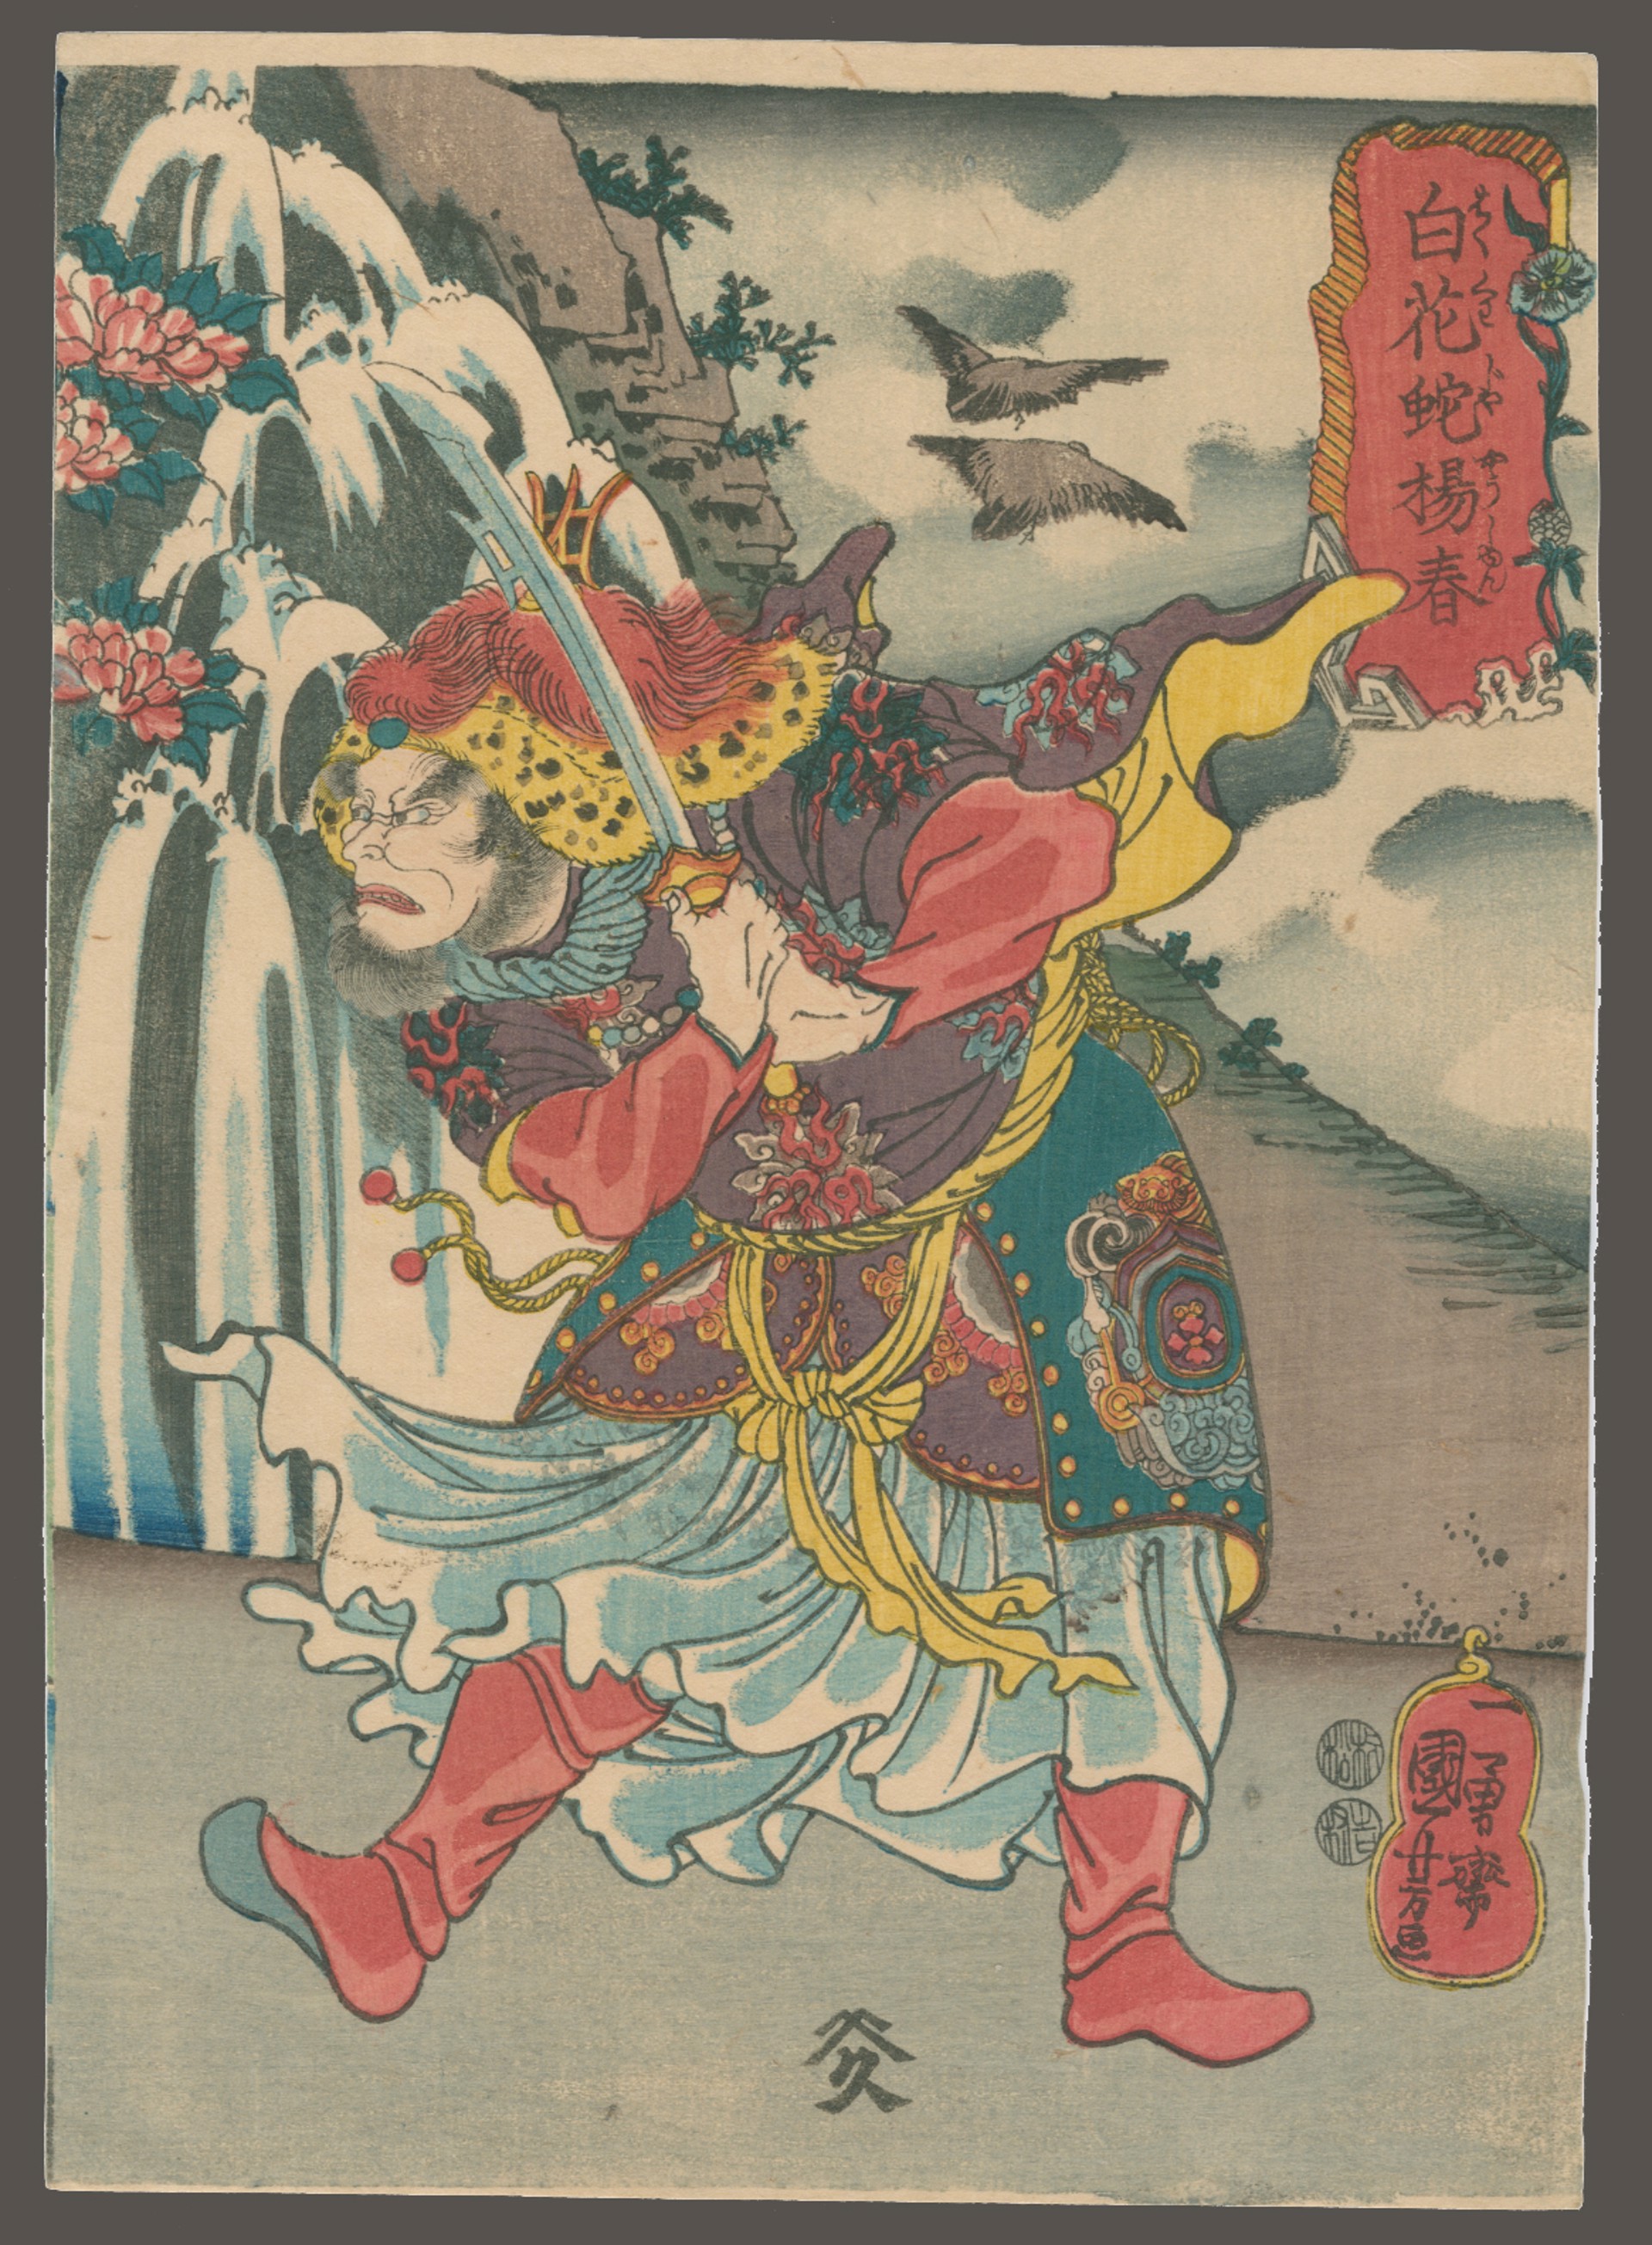 Hakkaja Yoshun 108 Heroes of the Popular Suikoden, 1 by1 by Kuniyoshi